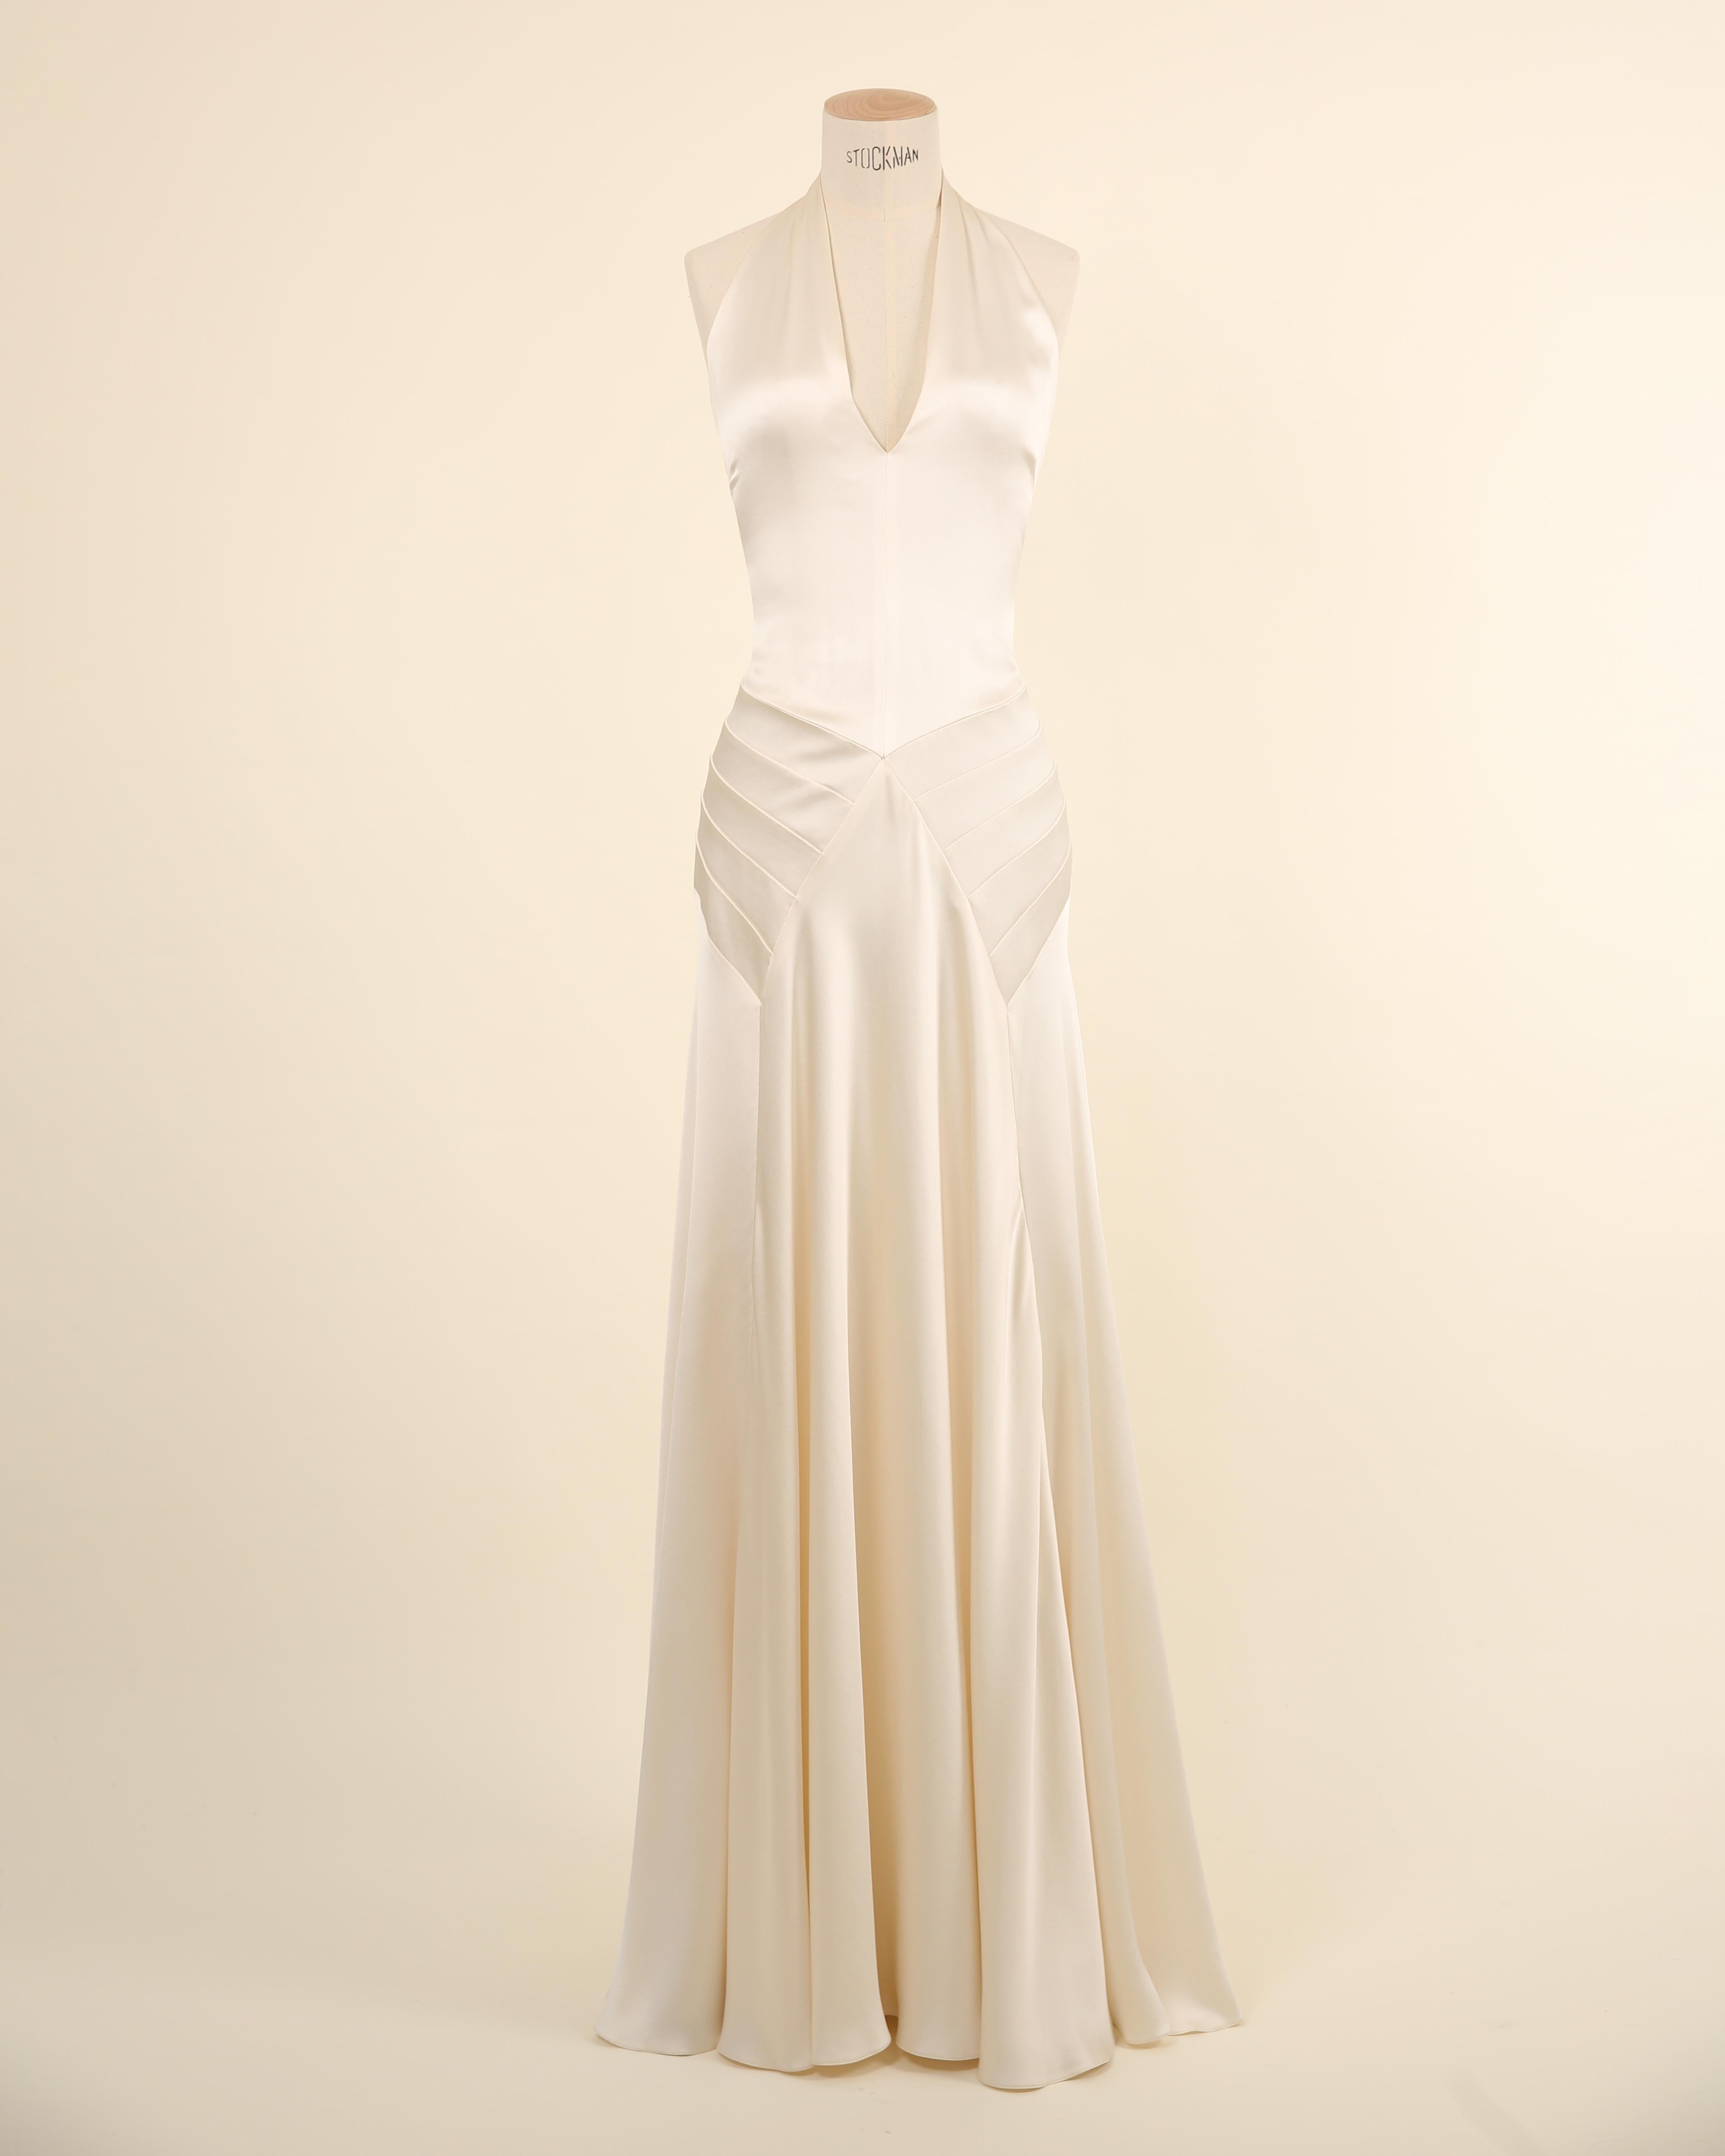 Ralph Lauren S/S 2009 white ivory silk plunging halter neck wedding gown dress In Good Condition For Sale In Paris, FR